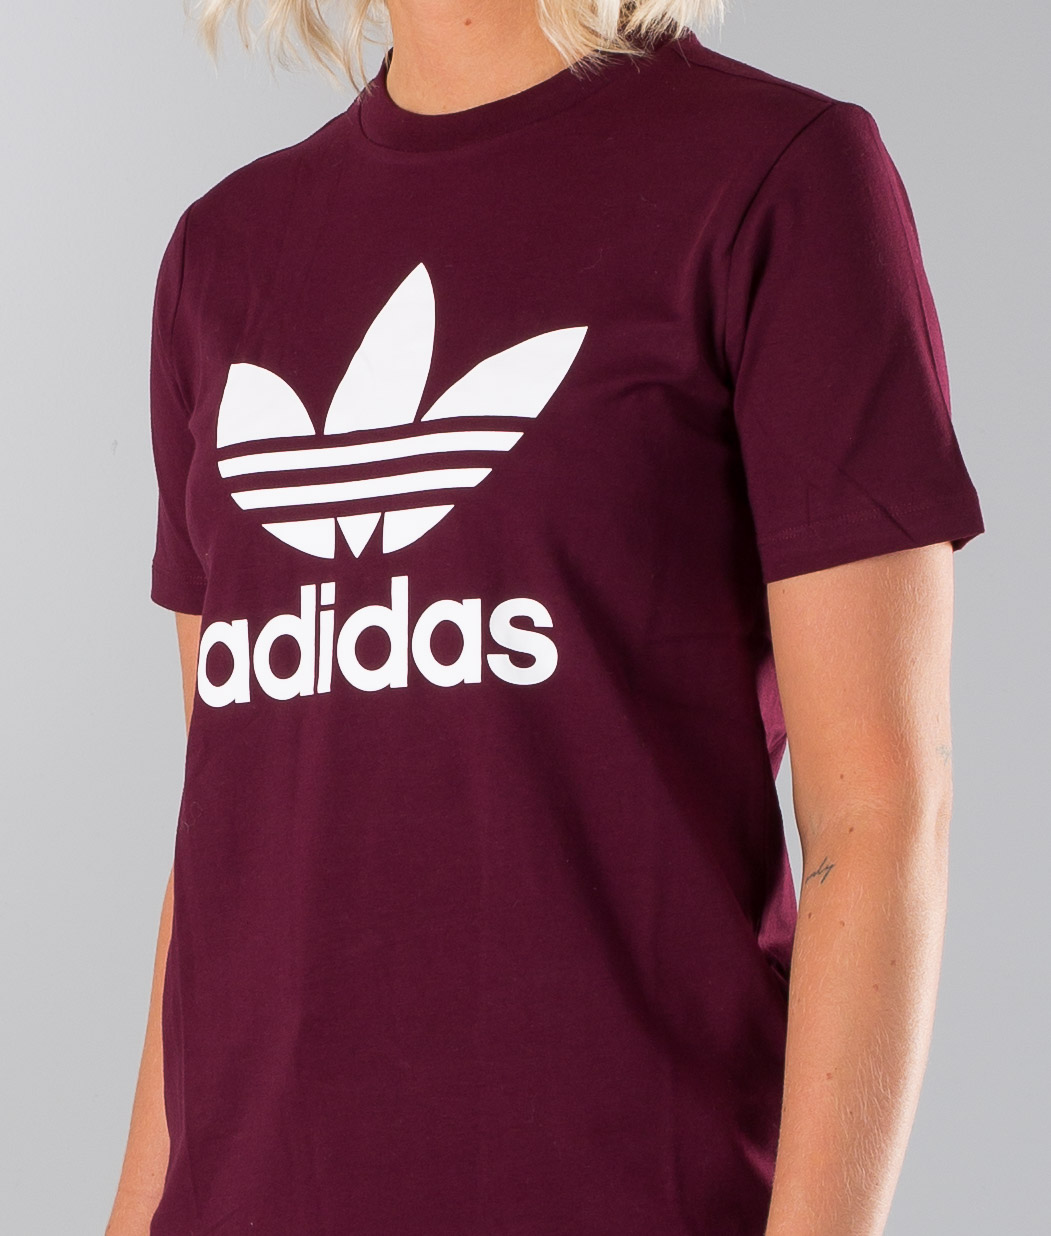 Adidas Originals Trefoil T-shirt Maroon 